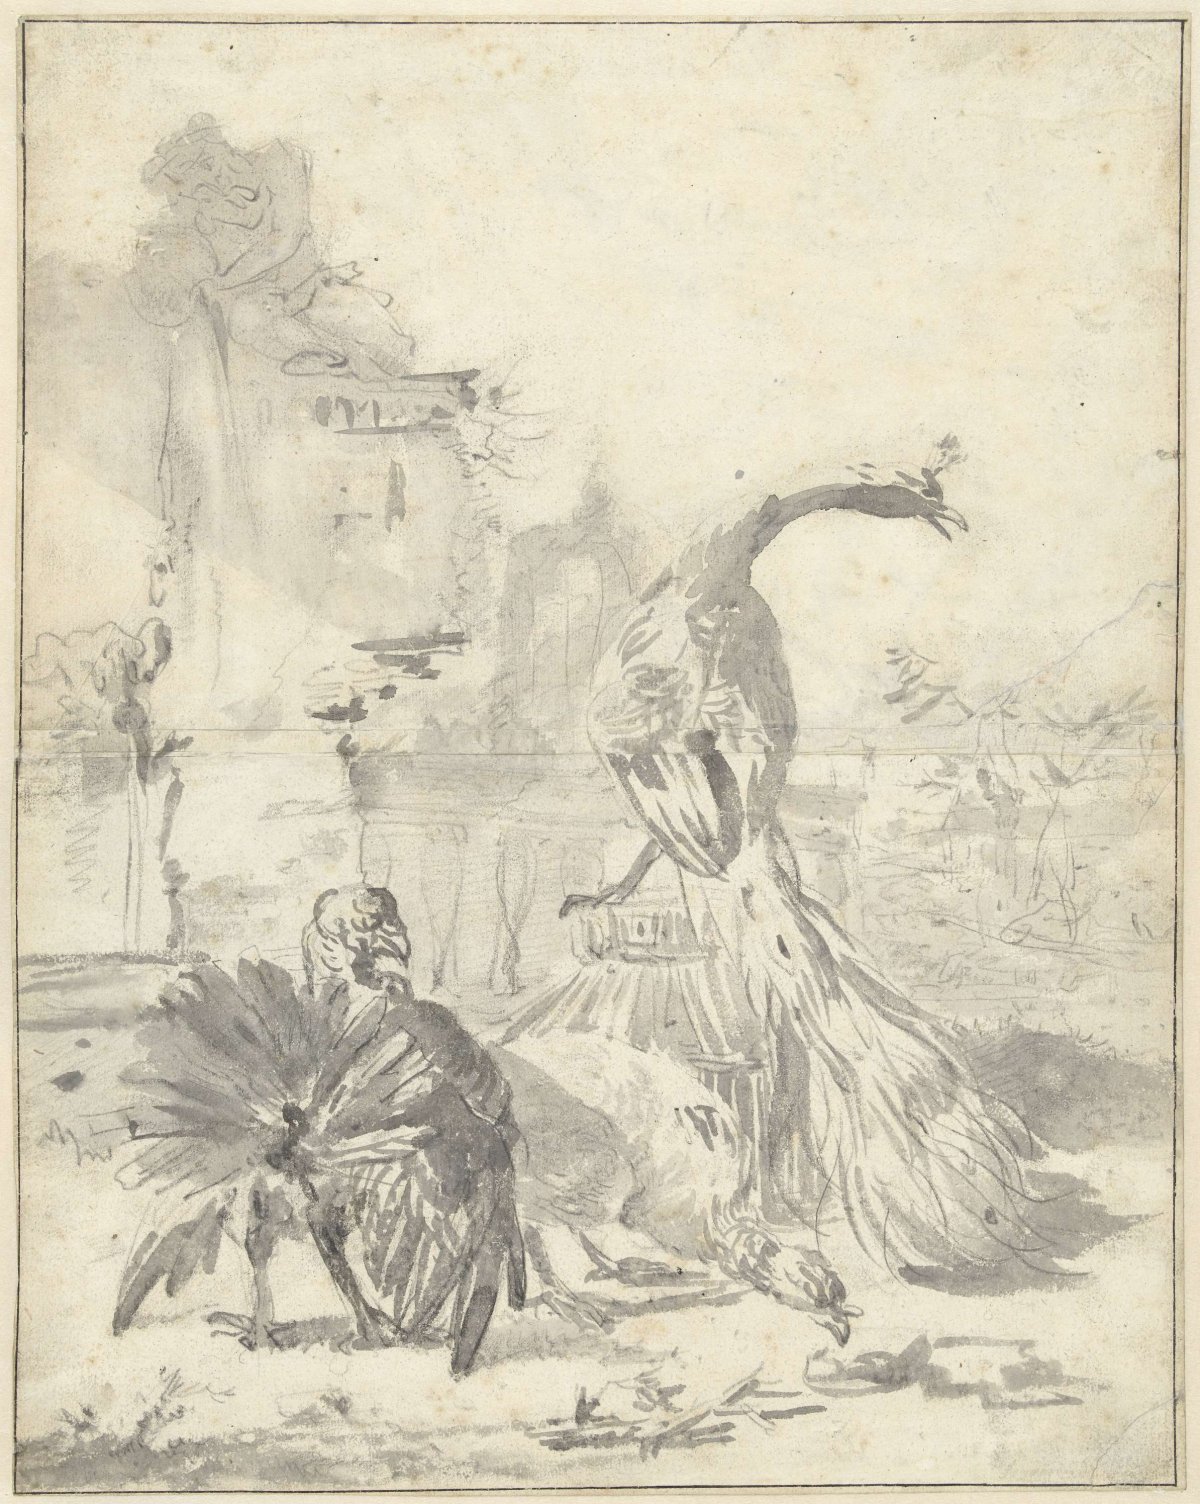 Hoenderhof with a peacock and two turkeys, Jan Weenix, 1650 - 1719